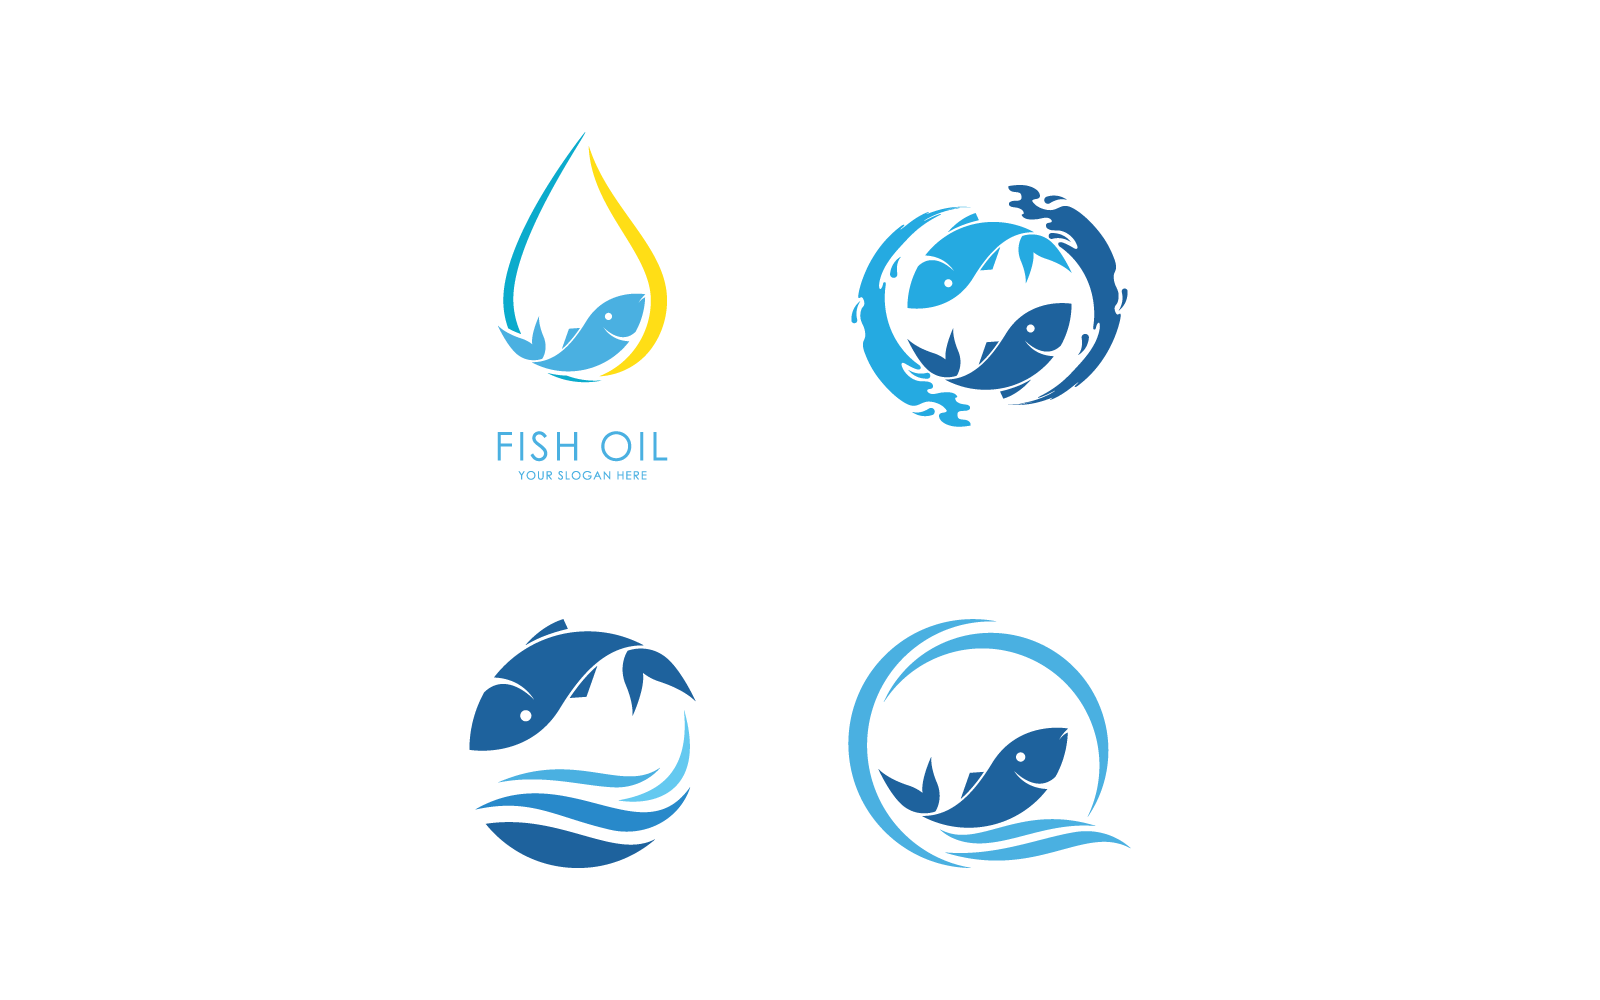 Fish oil design logo vector illustration template